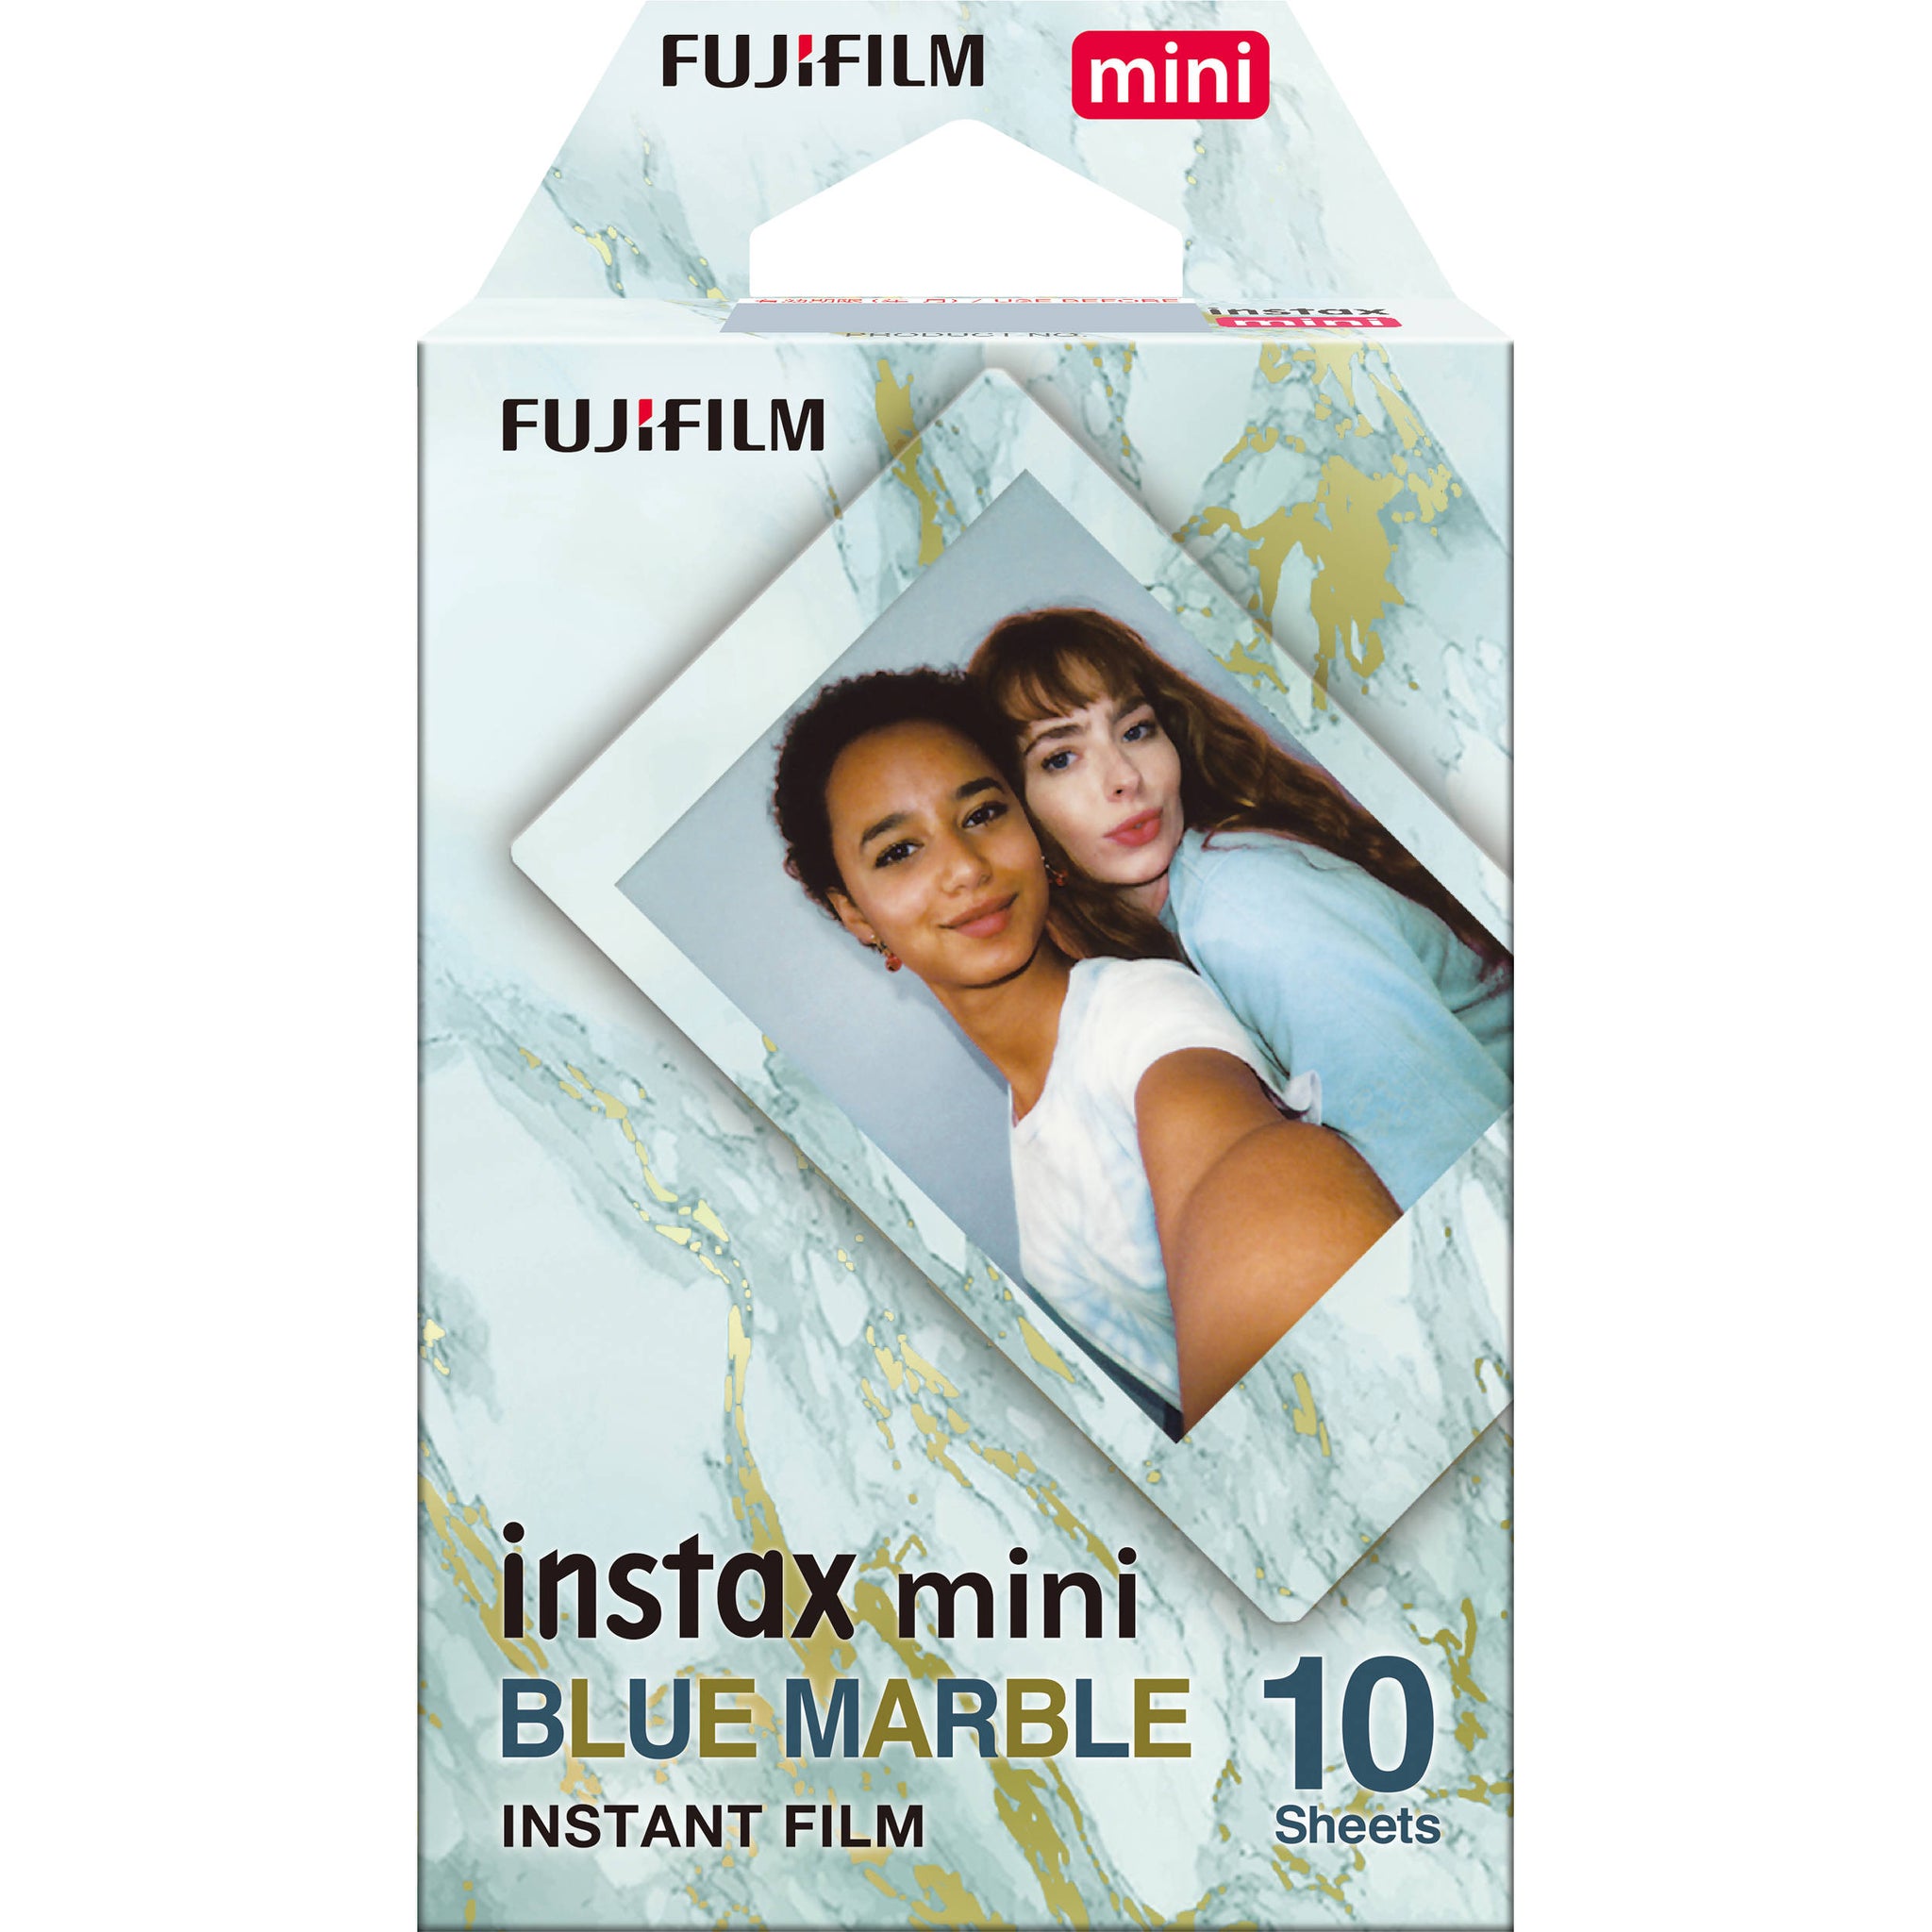 Fujifilm Instax Mini 10X1 blue marble Instant Film with Instax Time Photo Album 64 Sheets (FLAMINGO PINK)b